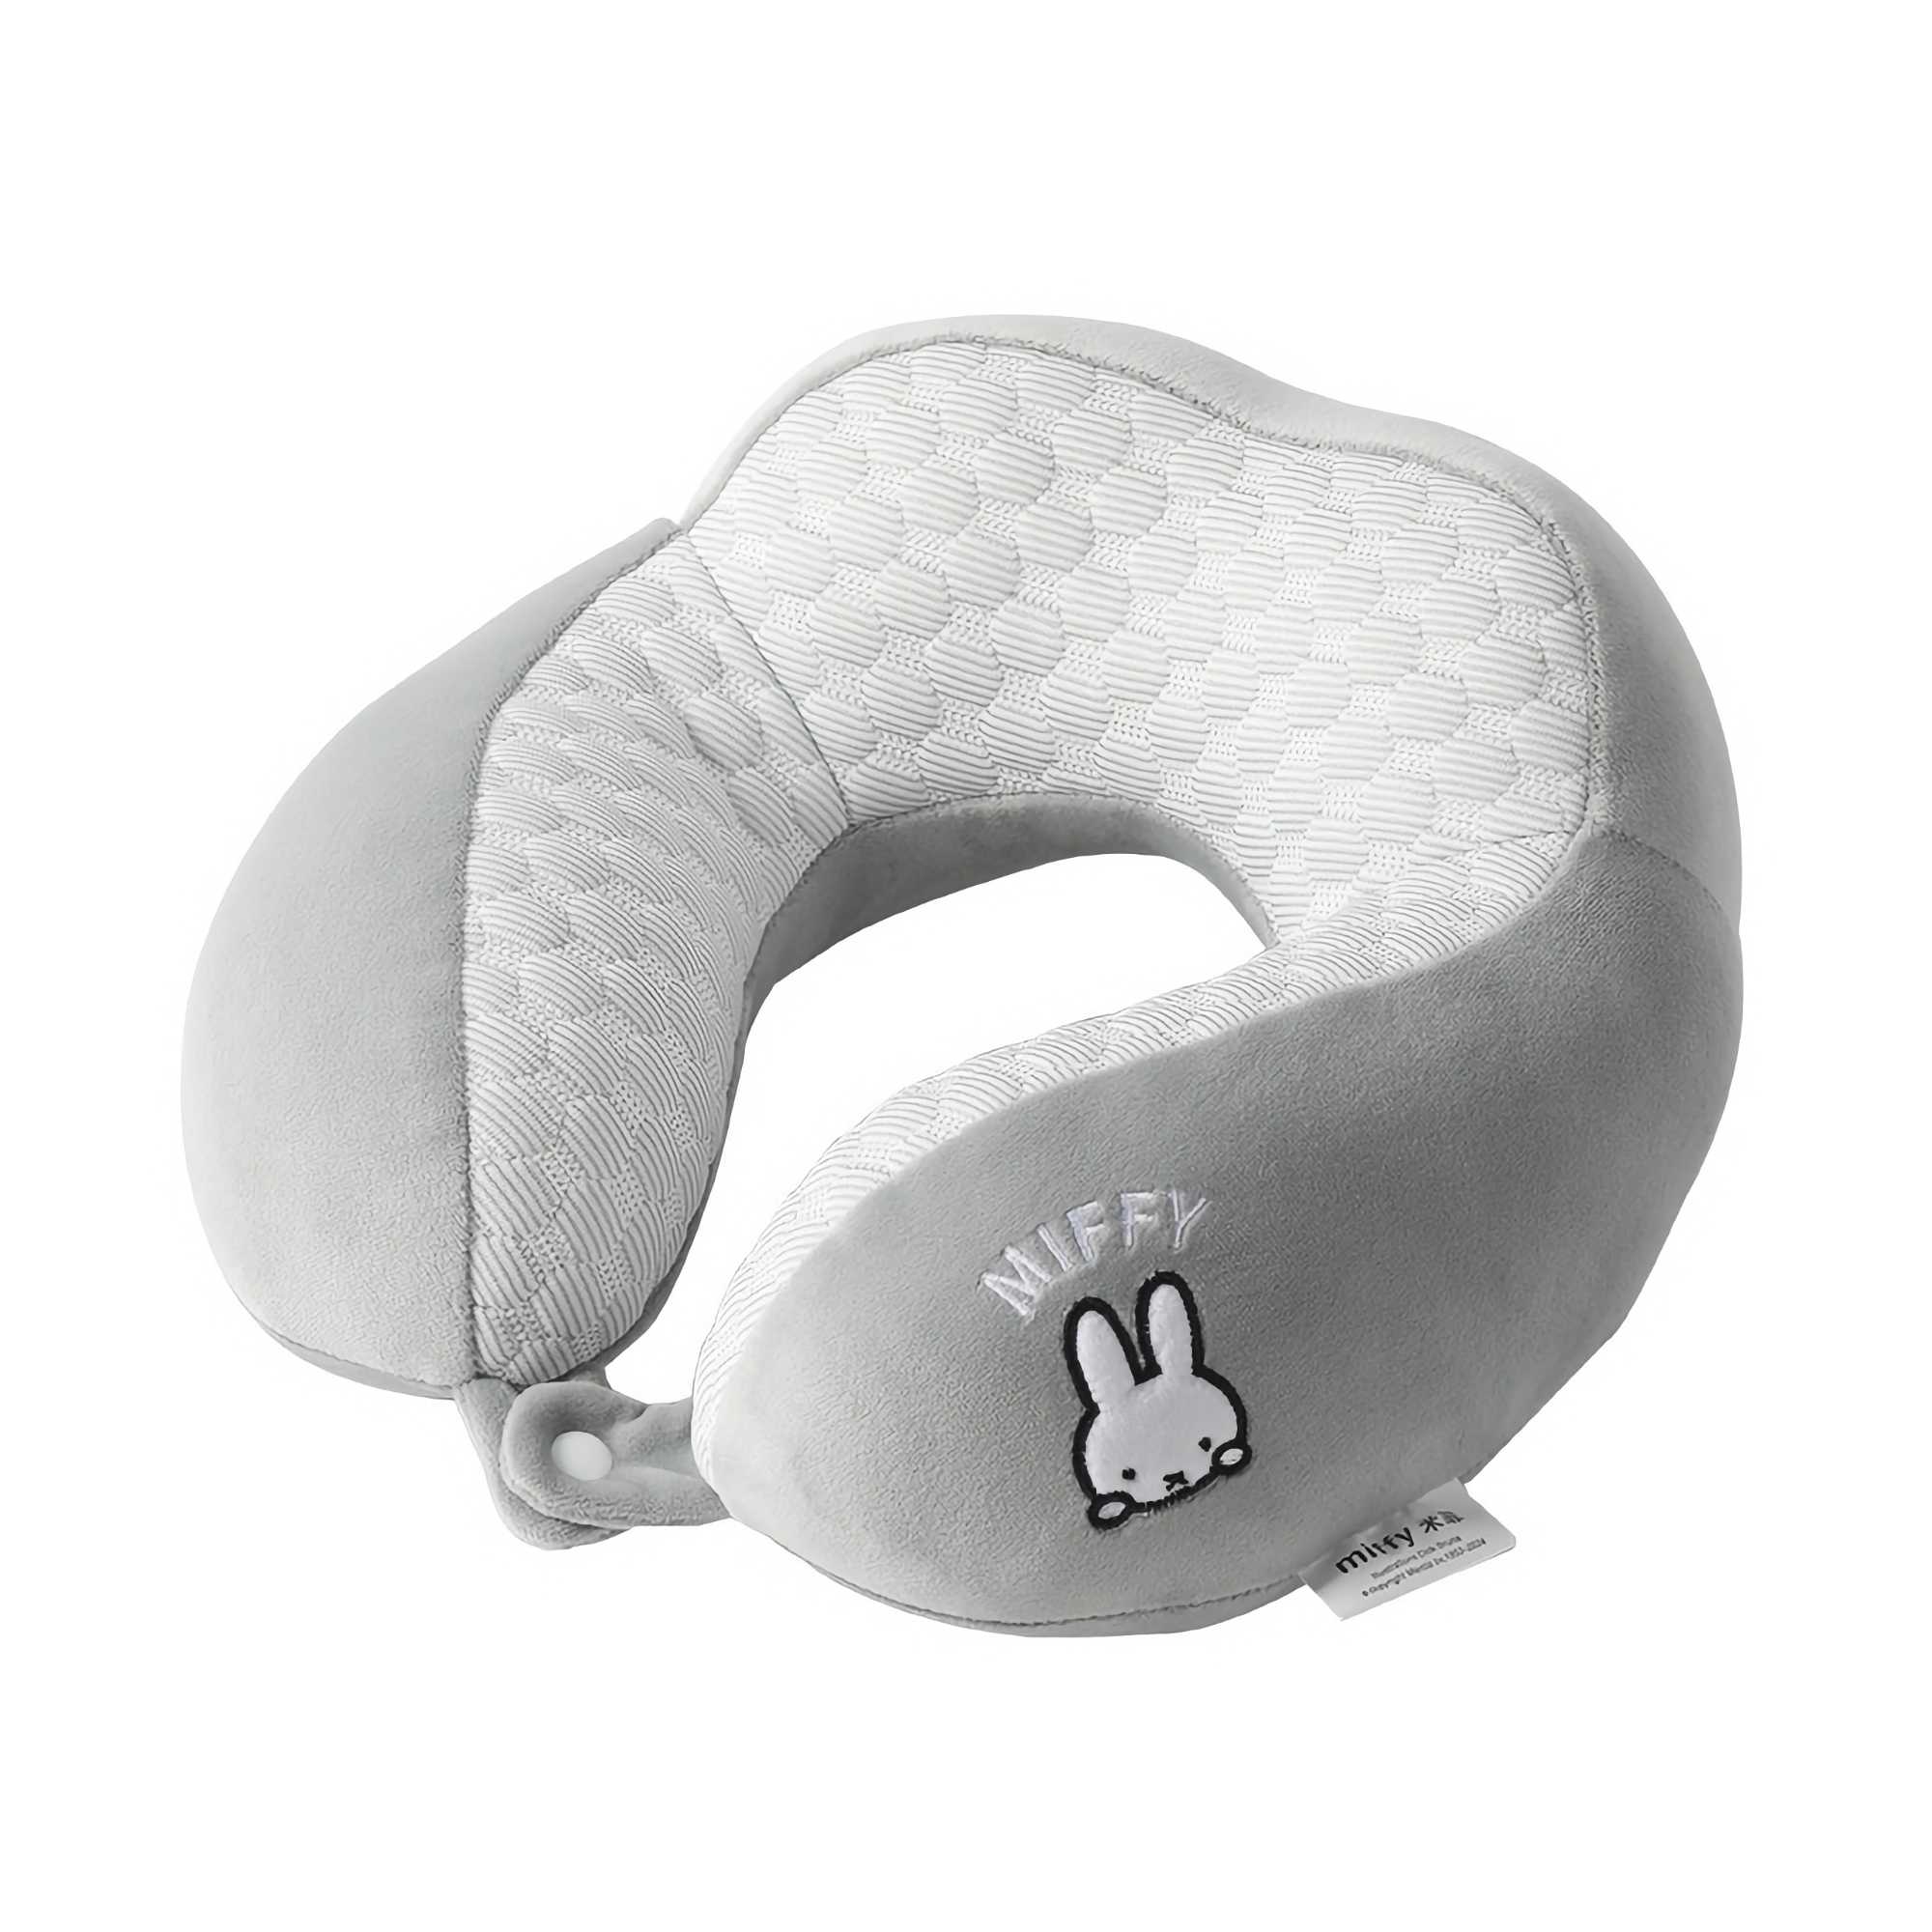 Miffy U-shape travel pillow, grey